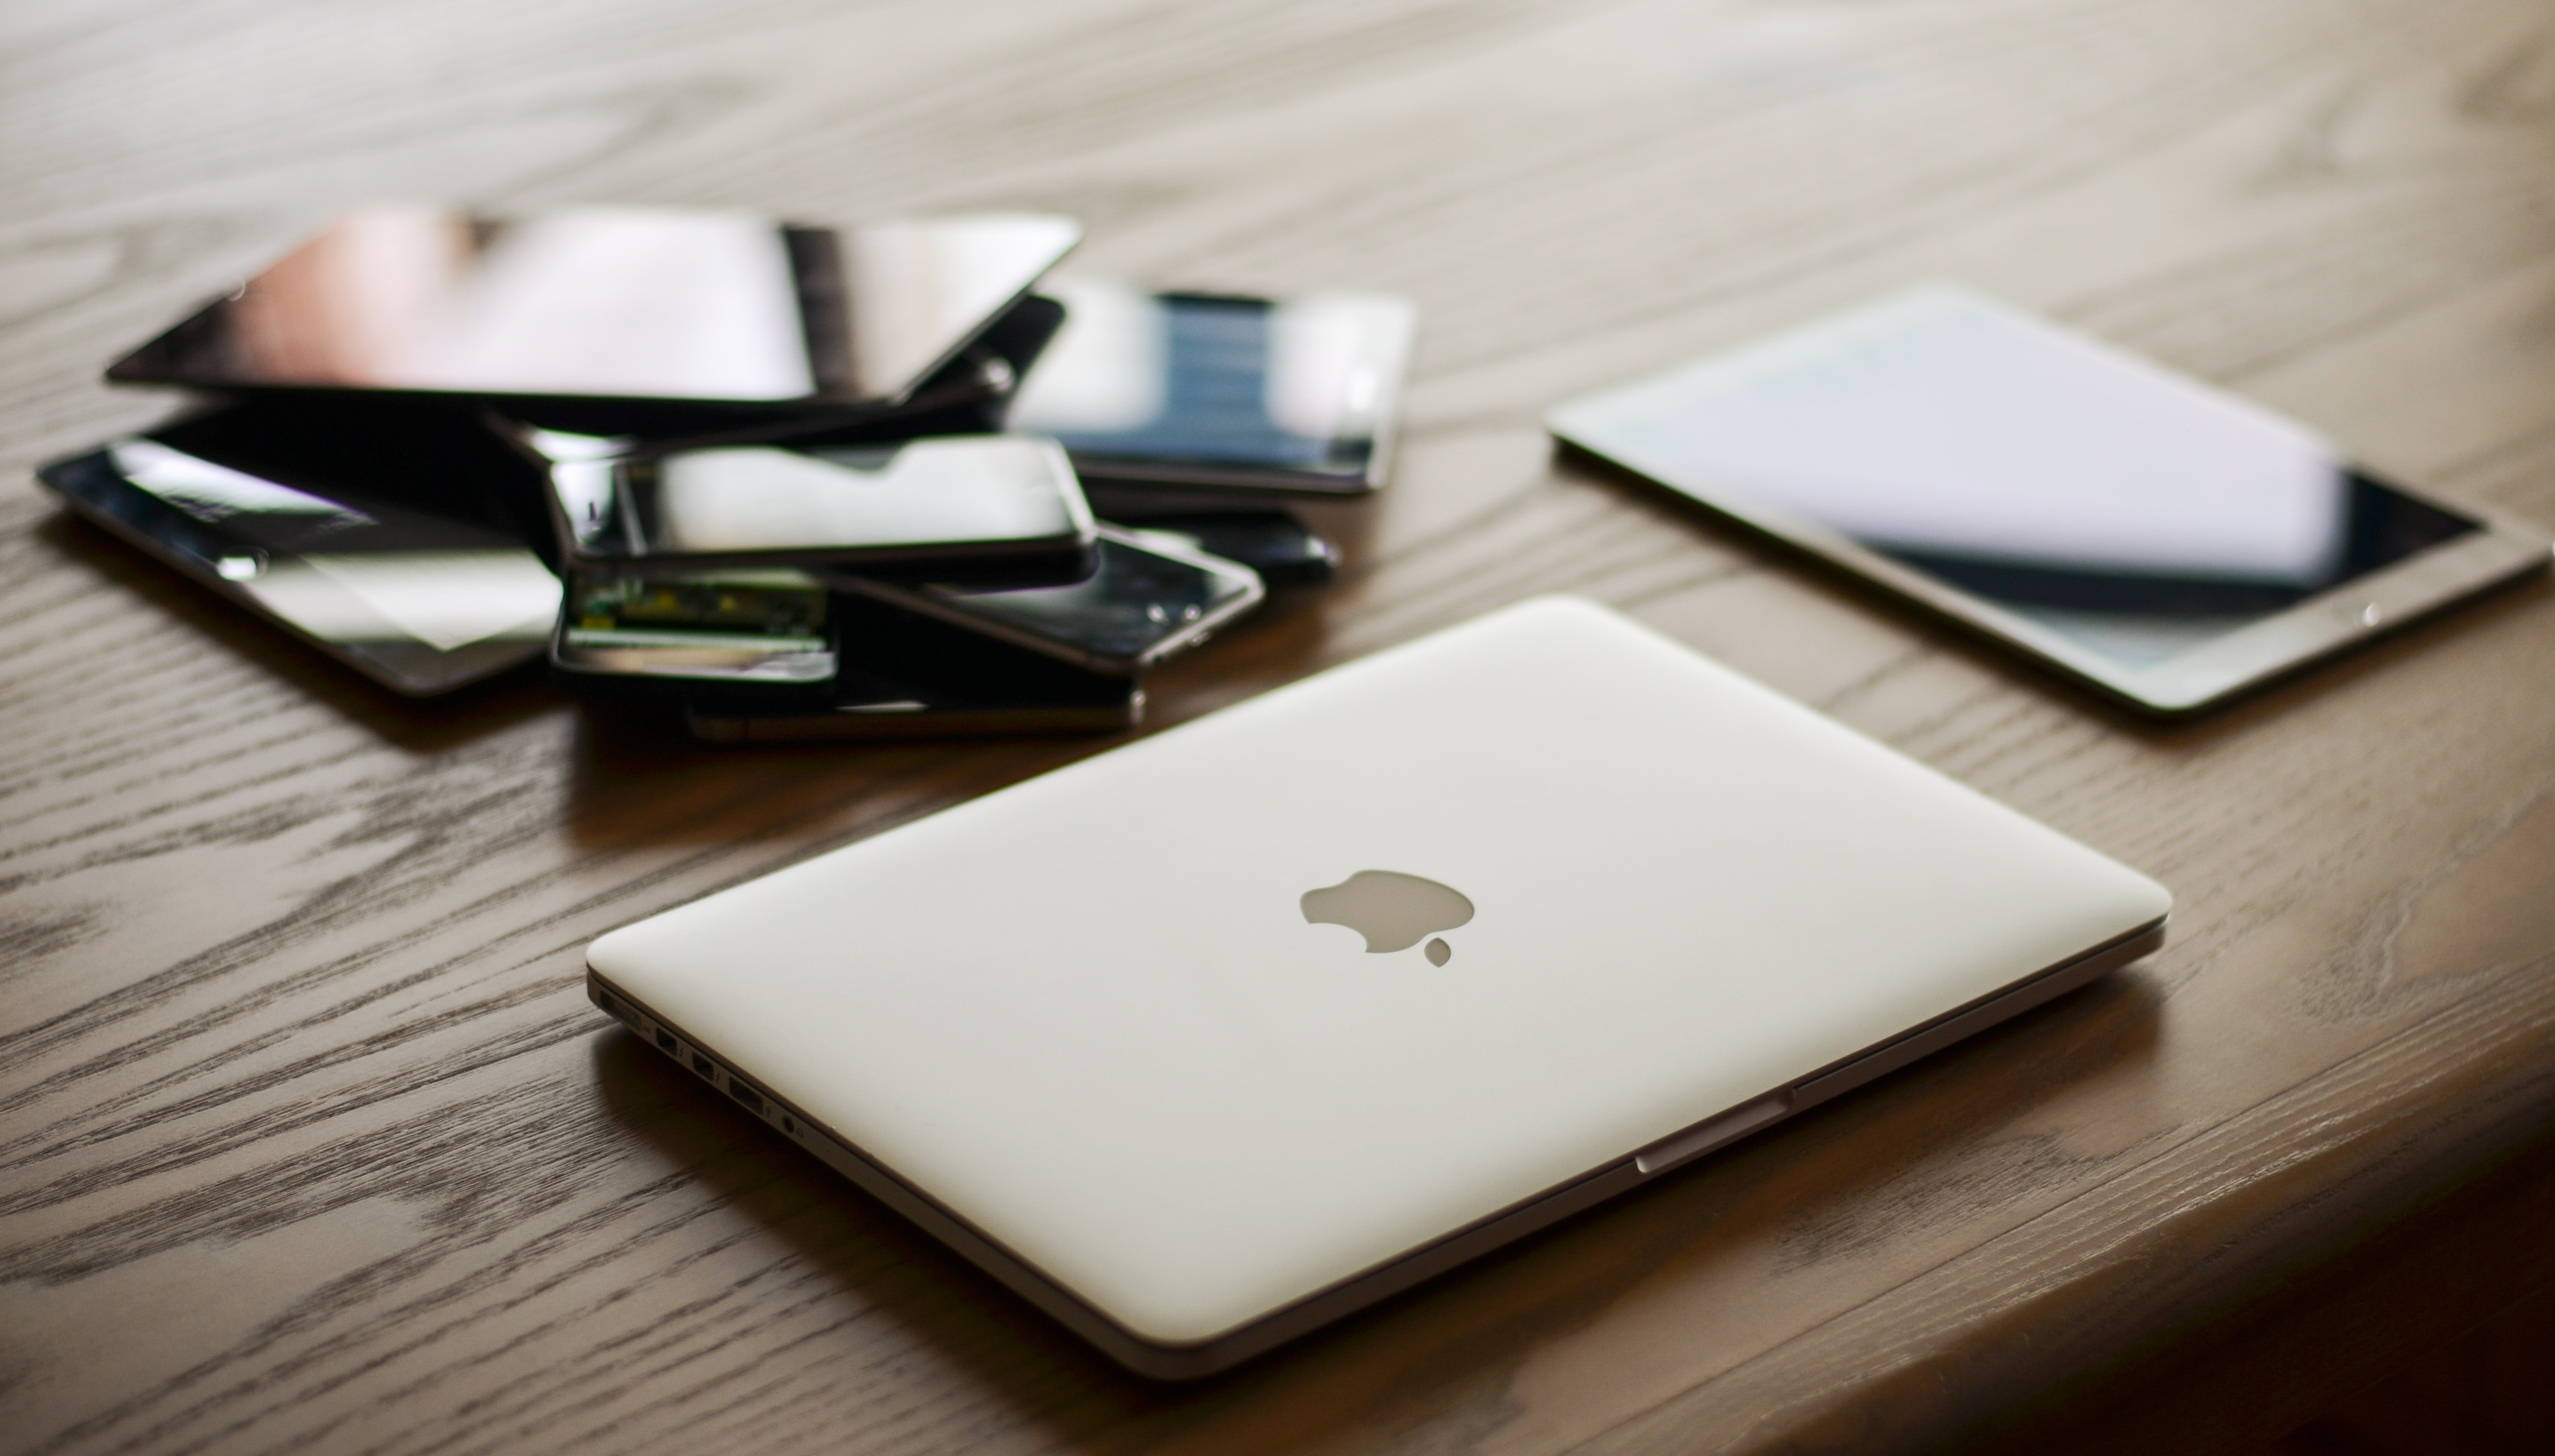 Macbook and ipad on desk photo